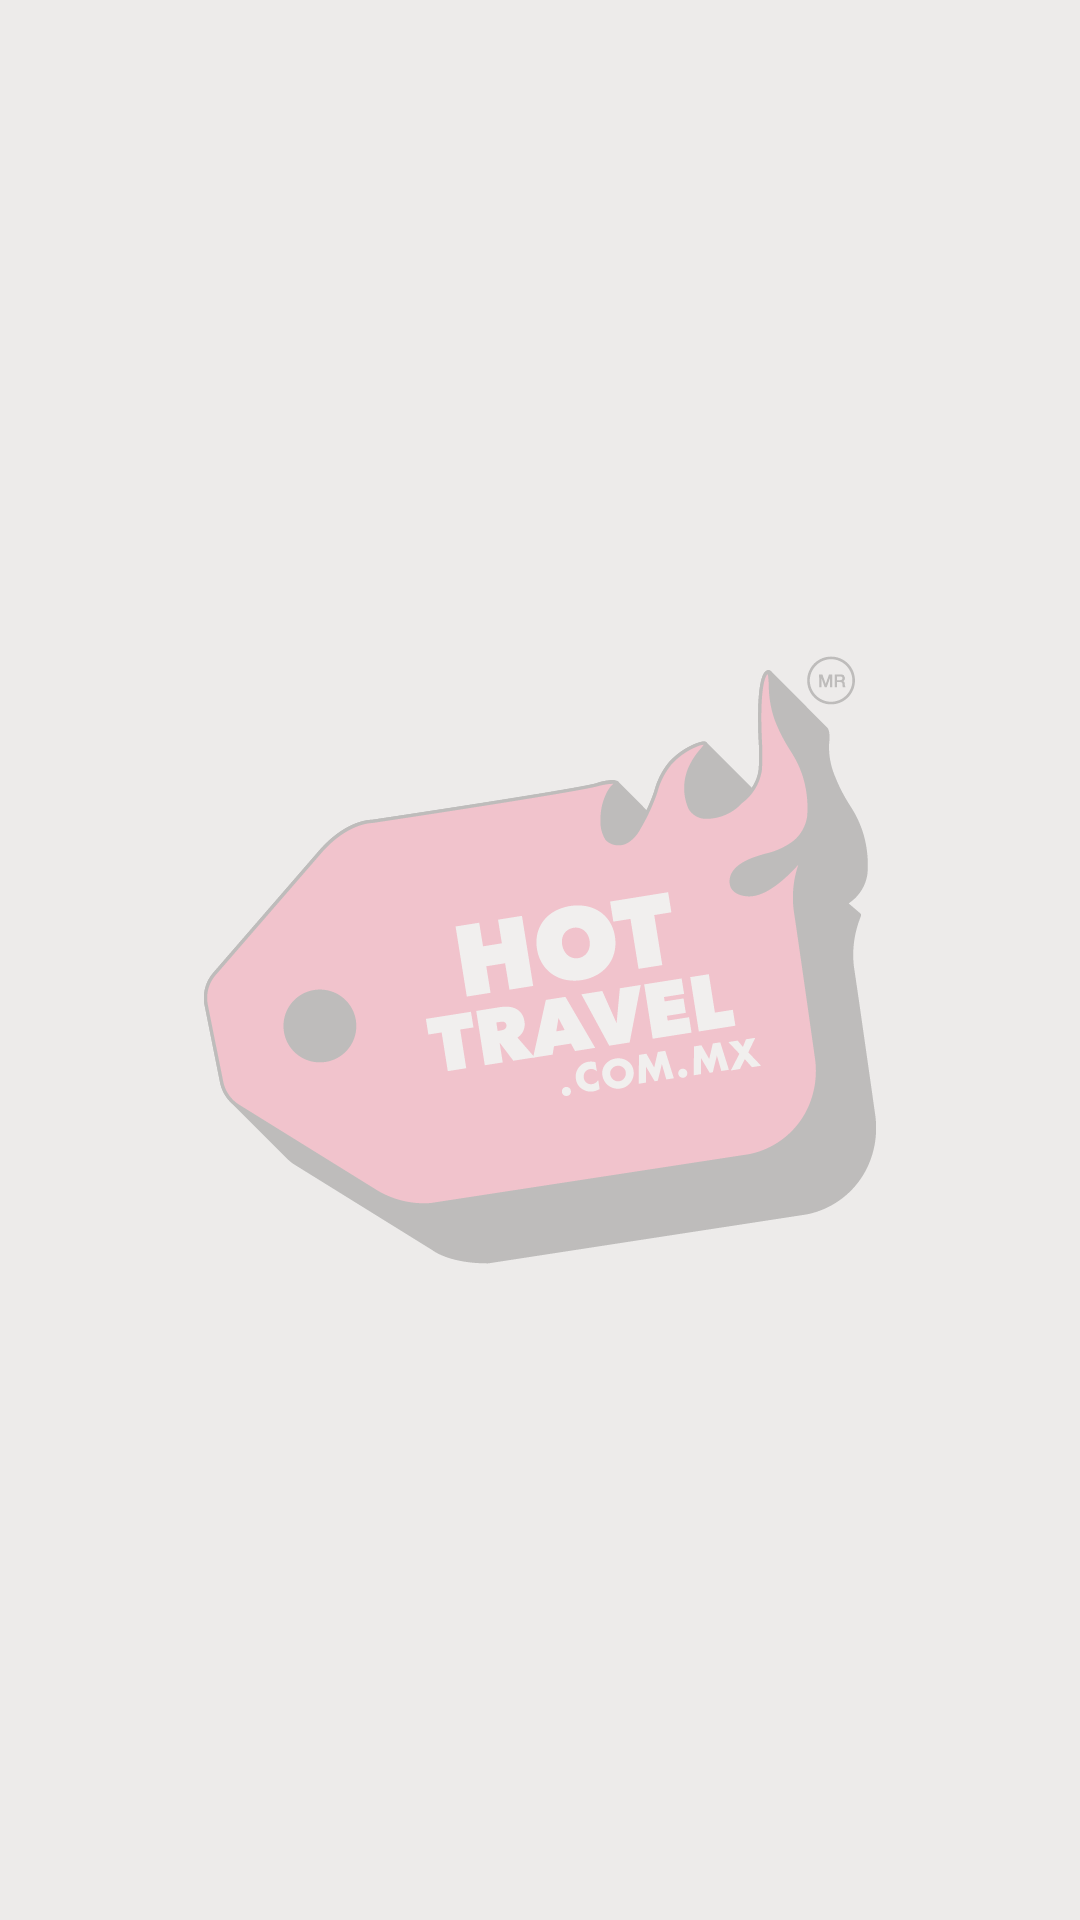 HOT TRAVEL Sandos Hotels & Resorts